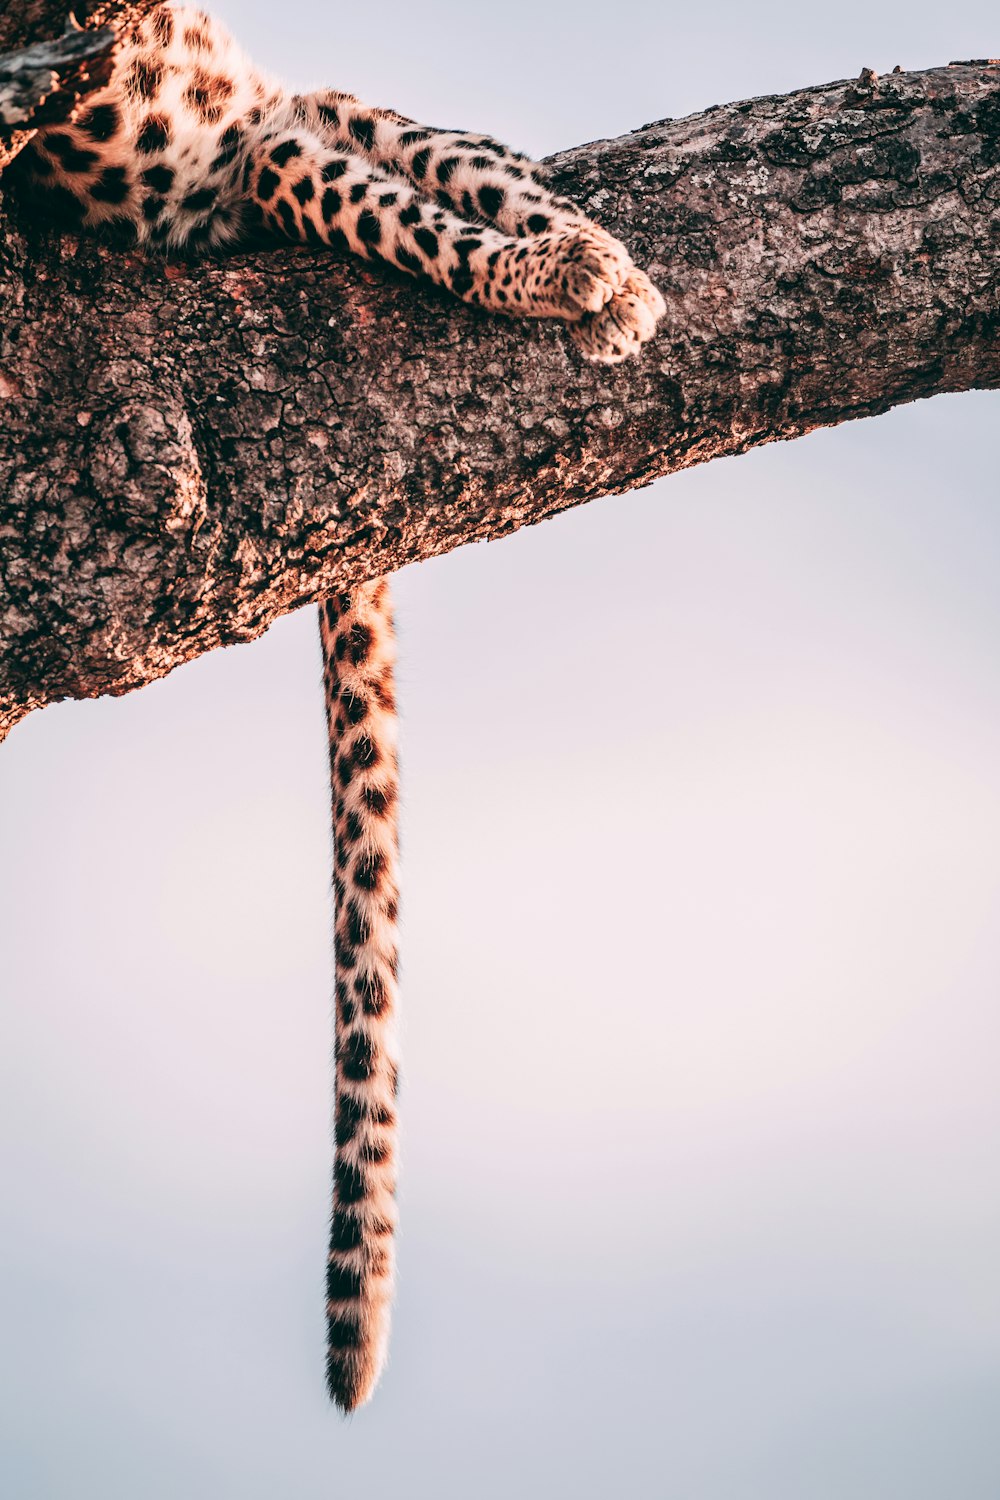 closeup fotografia leopardo na árvore